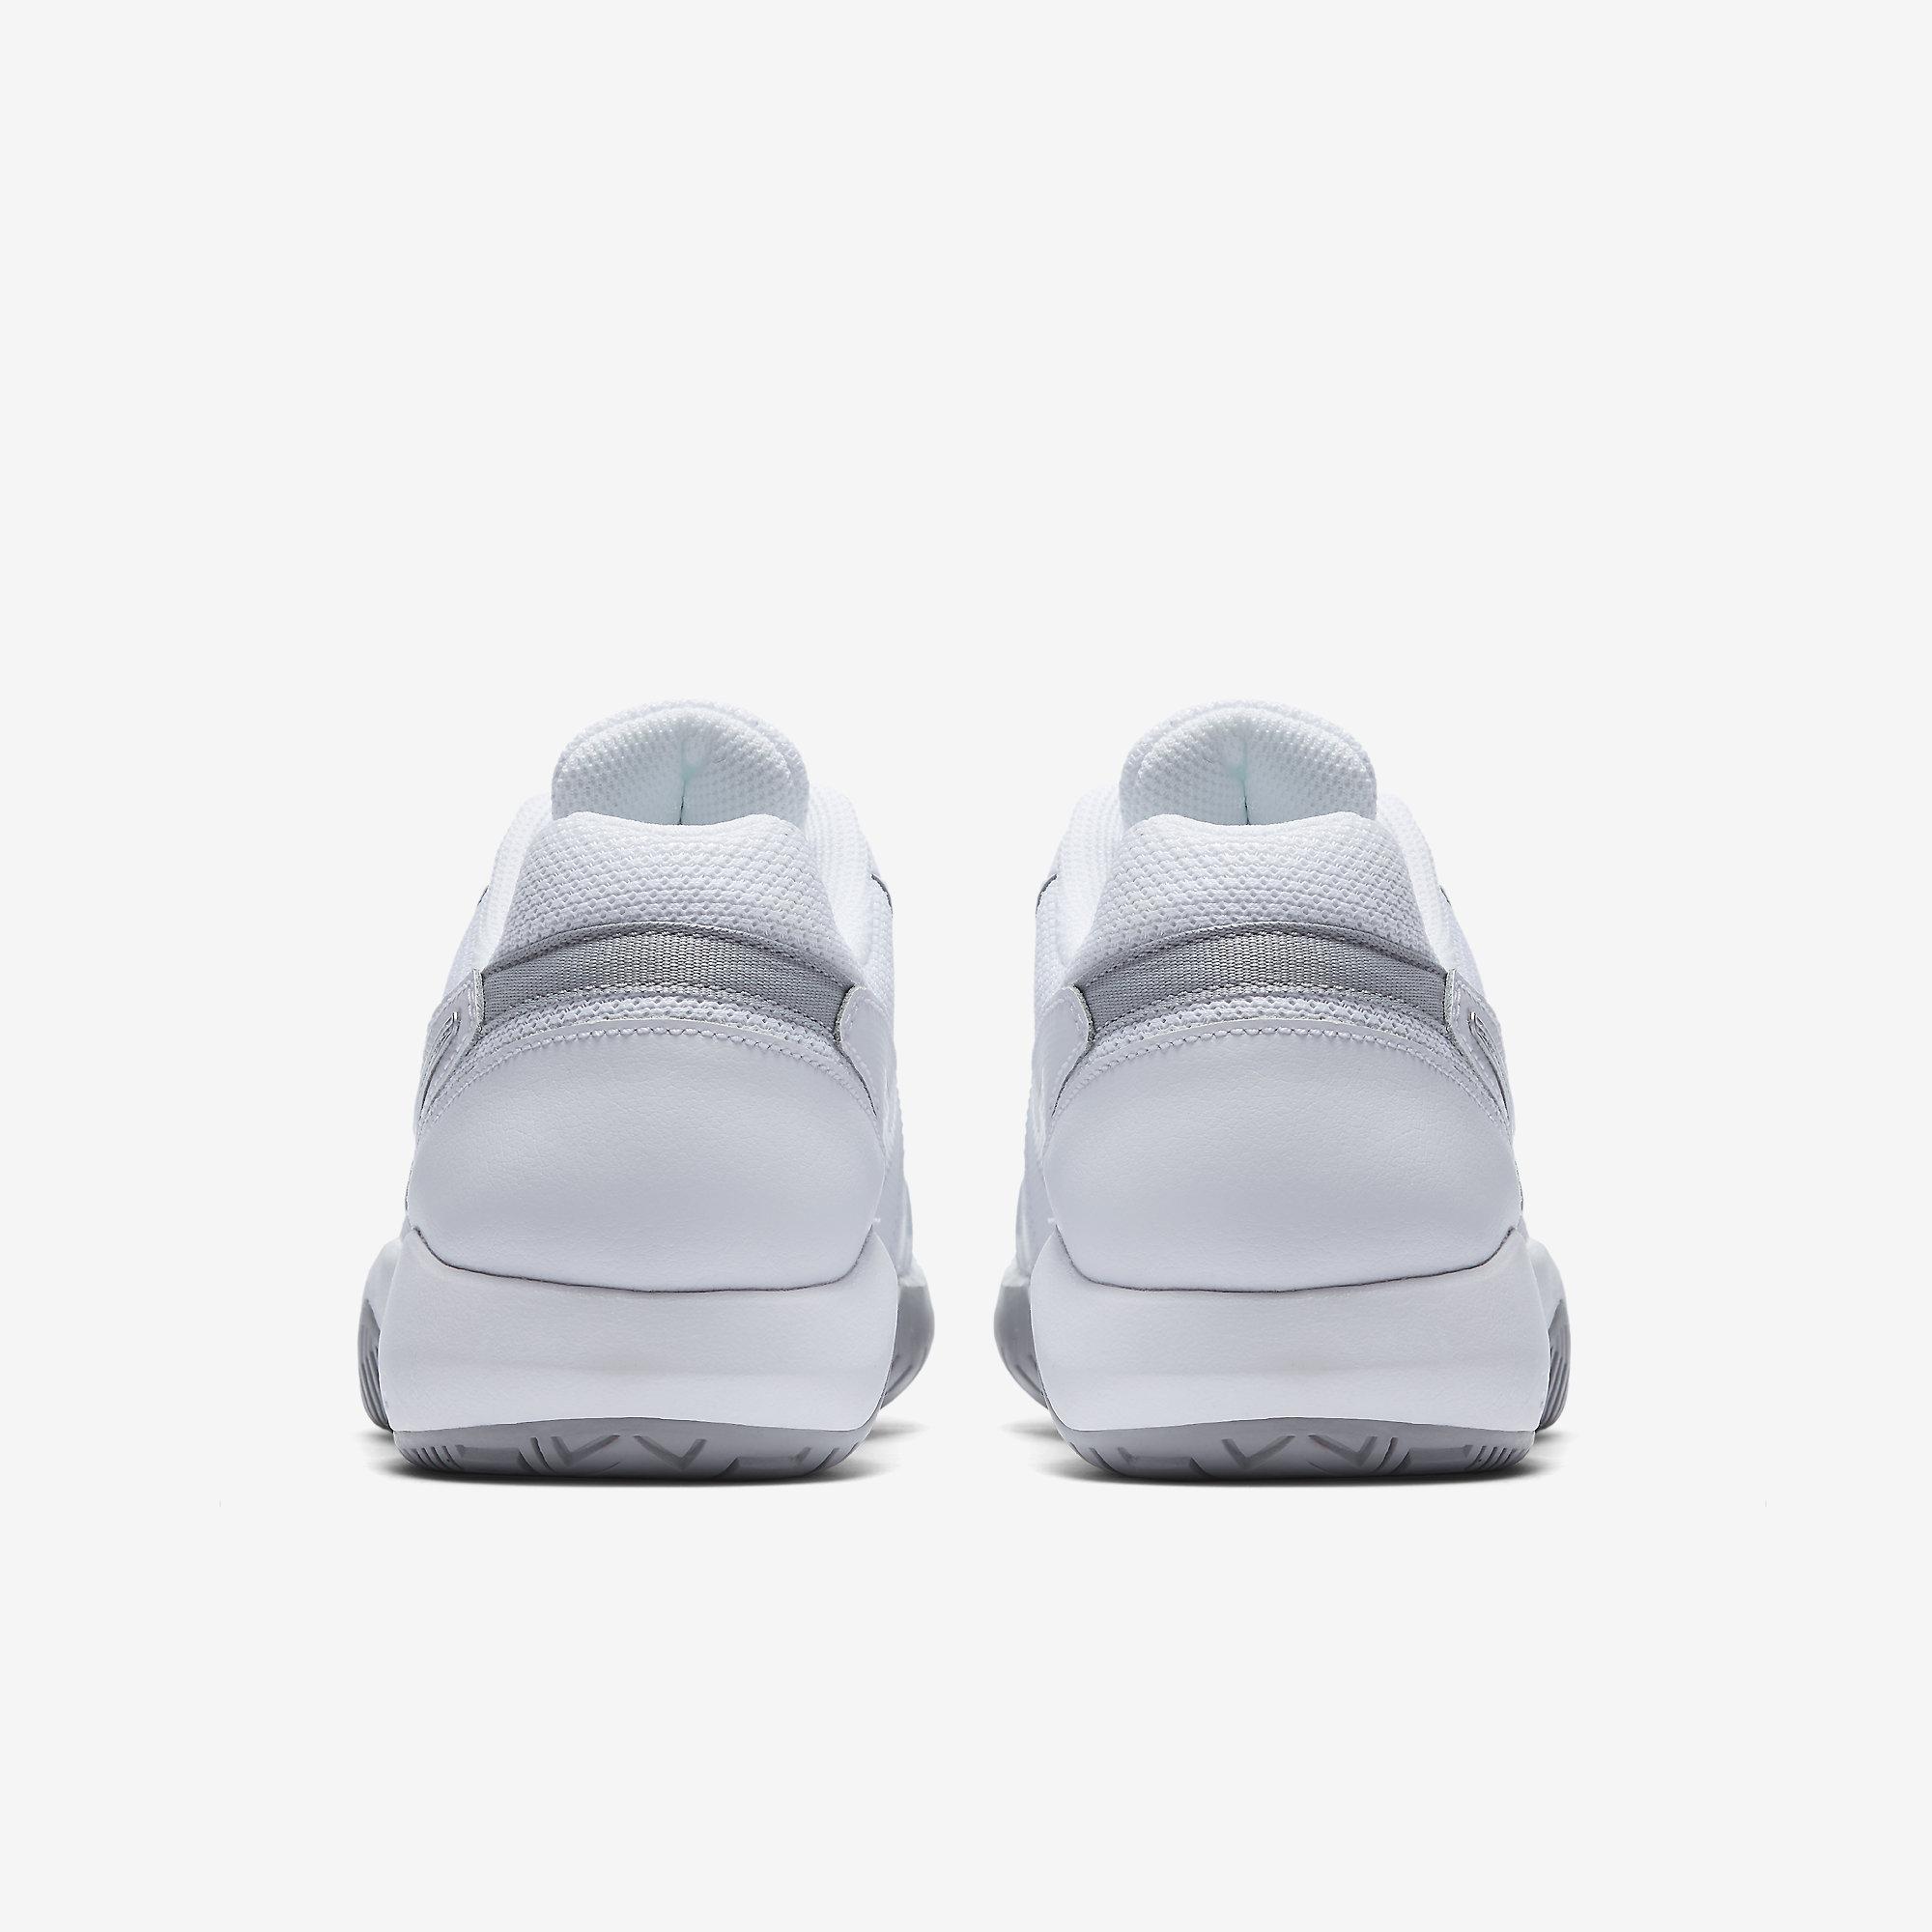 Nike Womens Air Zoom Resistance Tennis Shoes - White/Metallic Silver ...